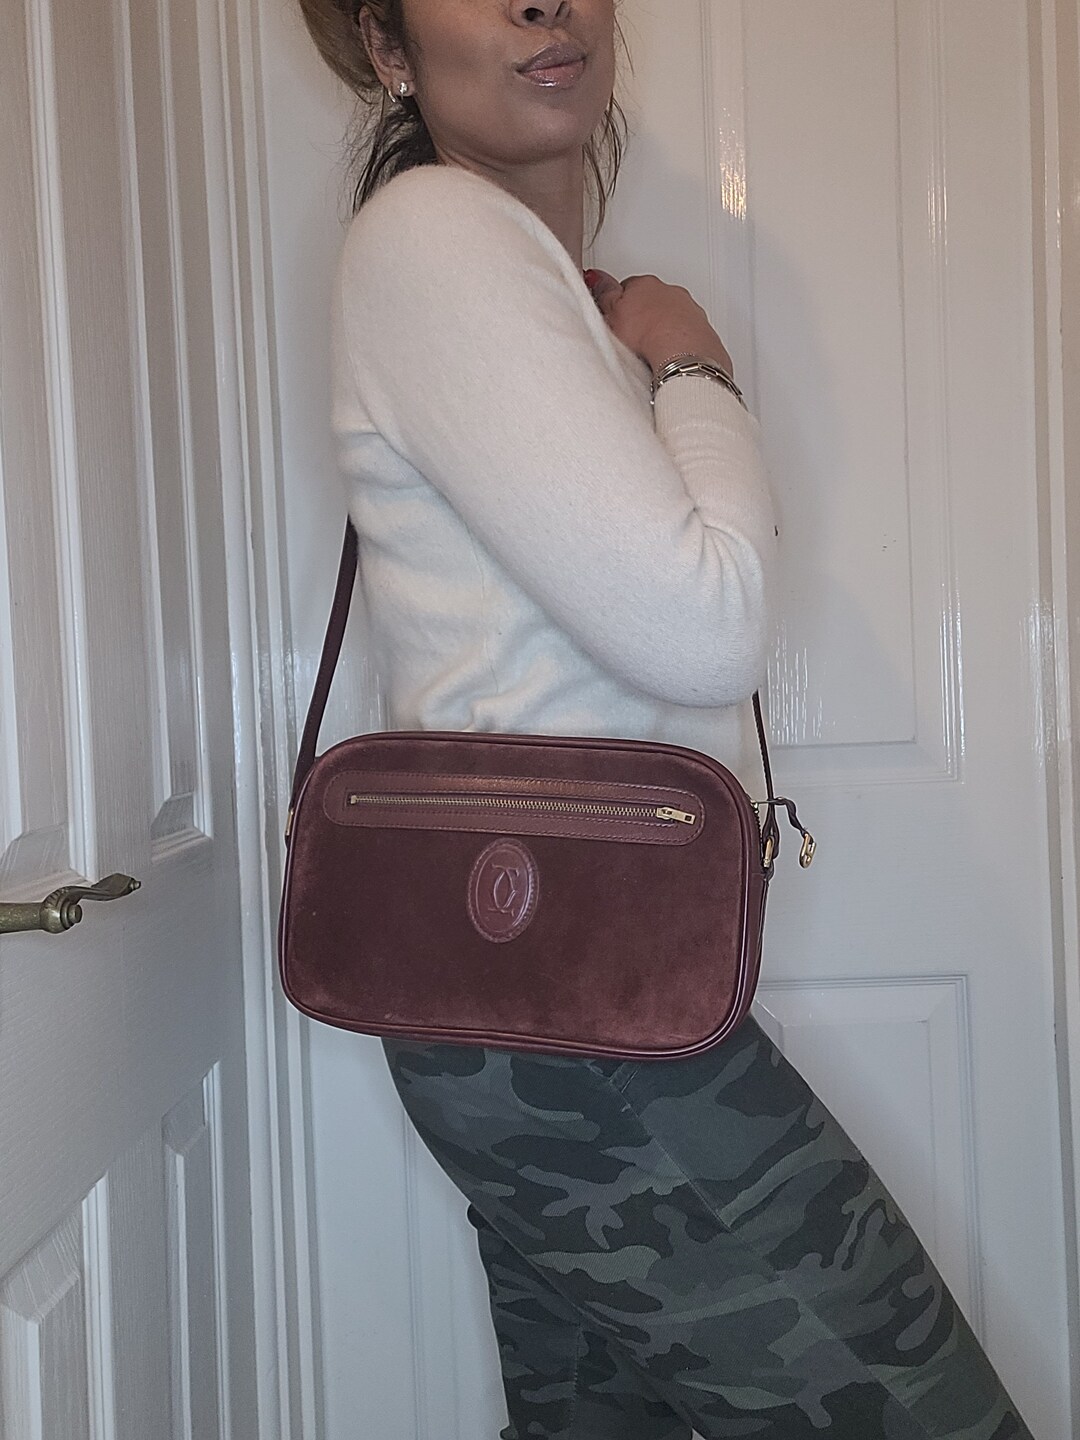 Thoughts on the YSL hobo bag as a first designer bag? : r/handbags